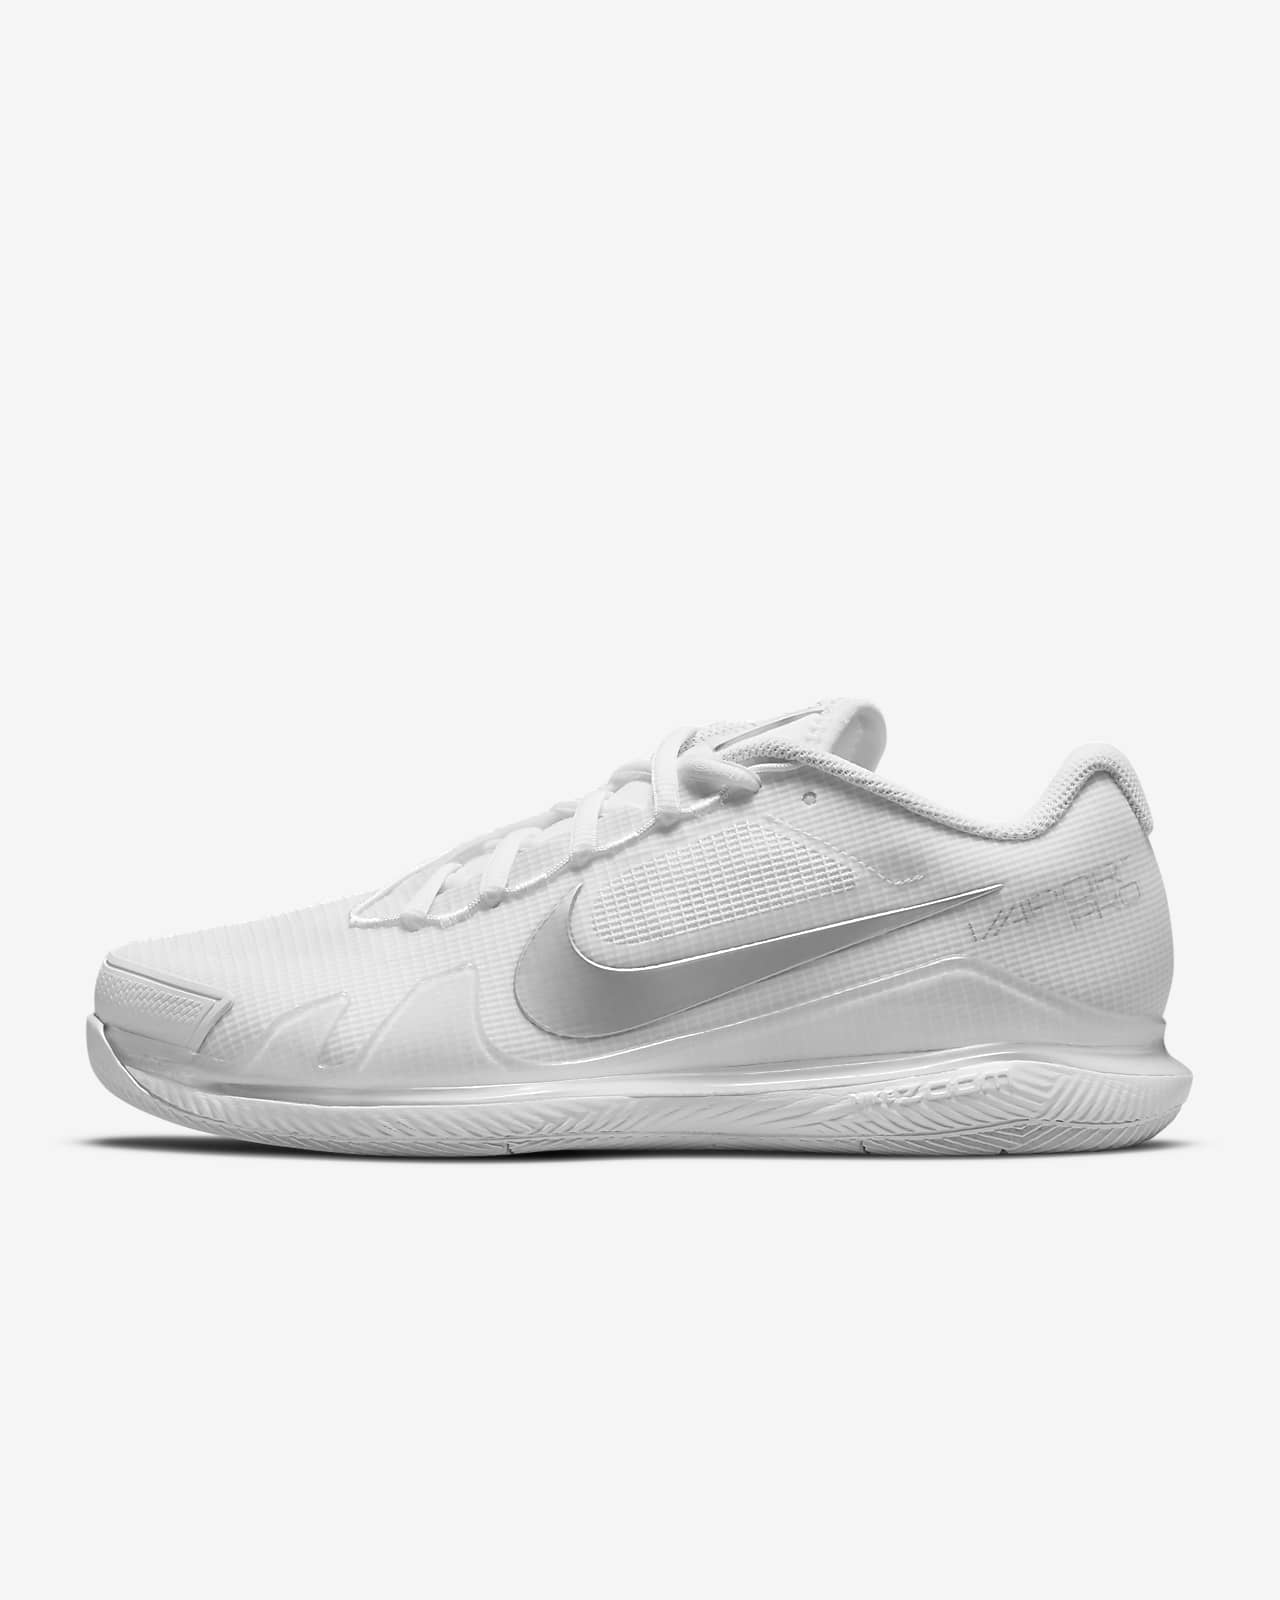 NikeCourt Air Zoom Vapor Pro Women's Hard Court Tennis Shoes